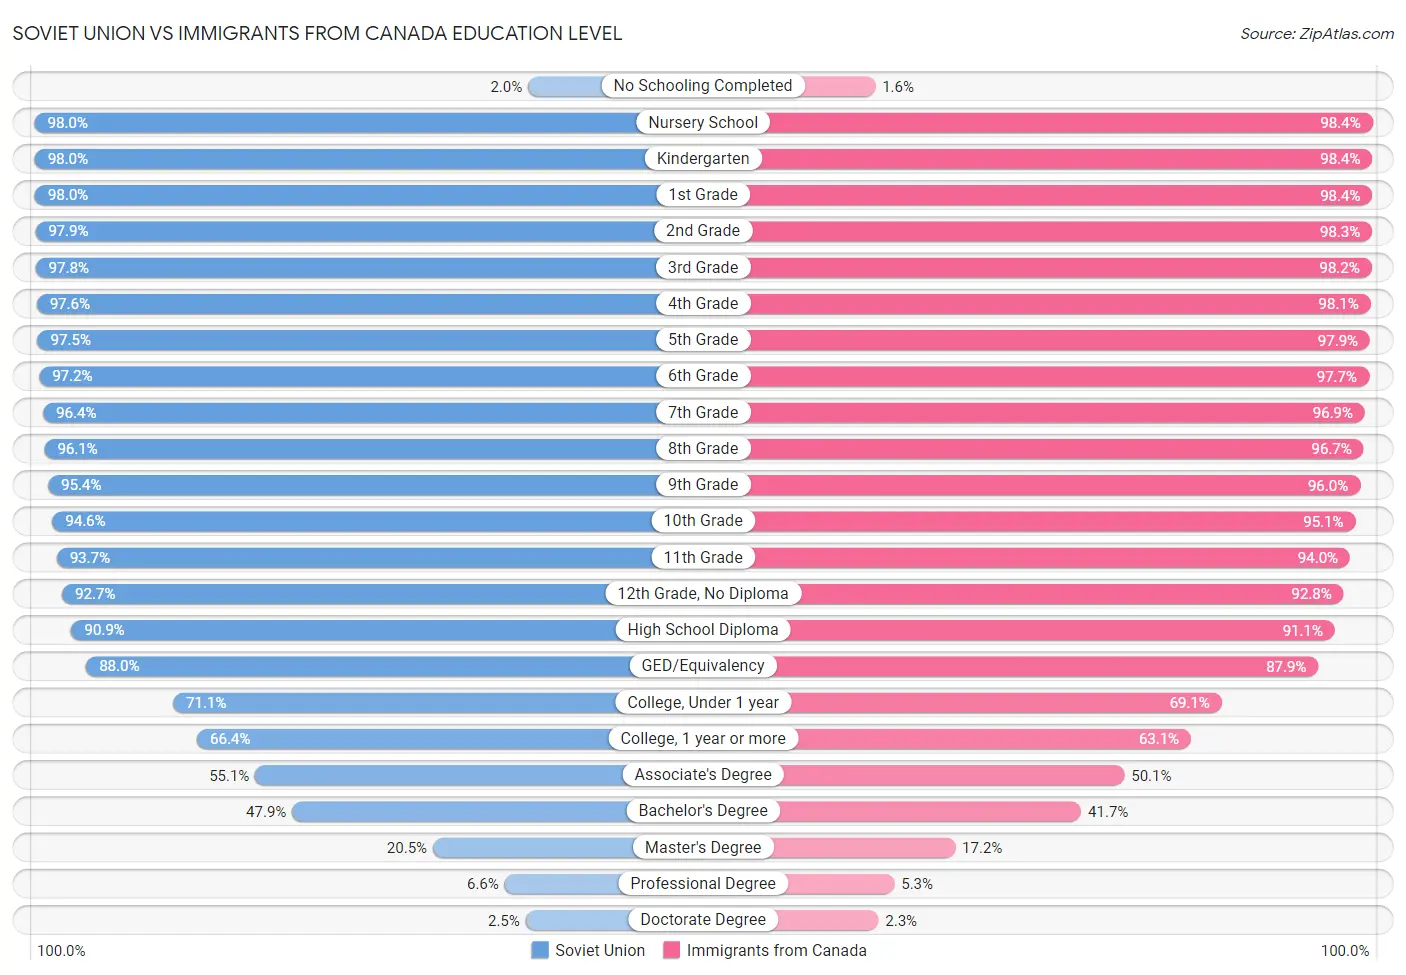 Soviet Union vs Immigrants from Canada Education Level